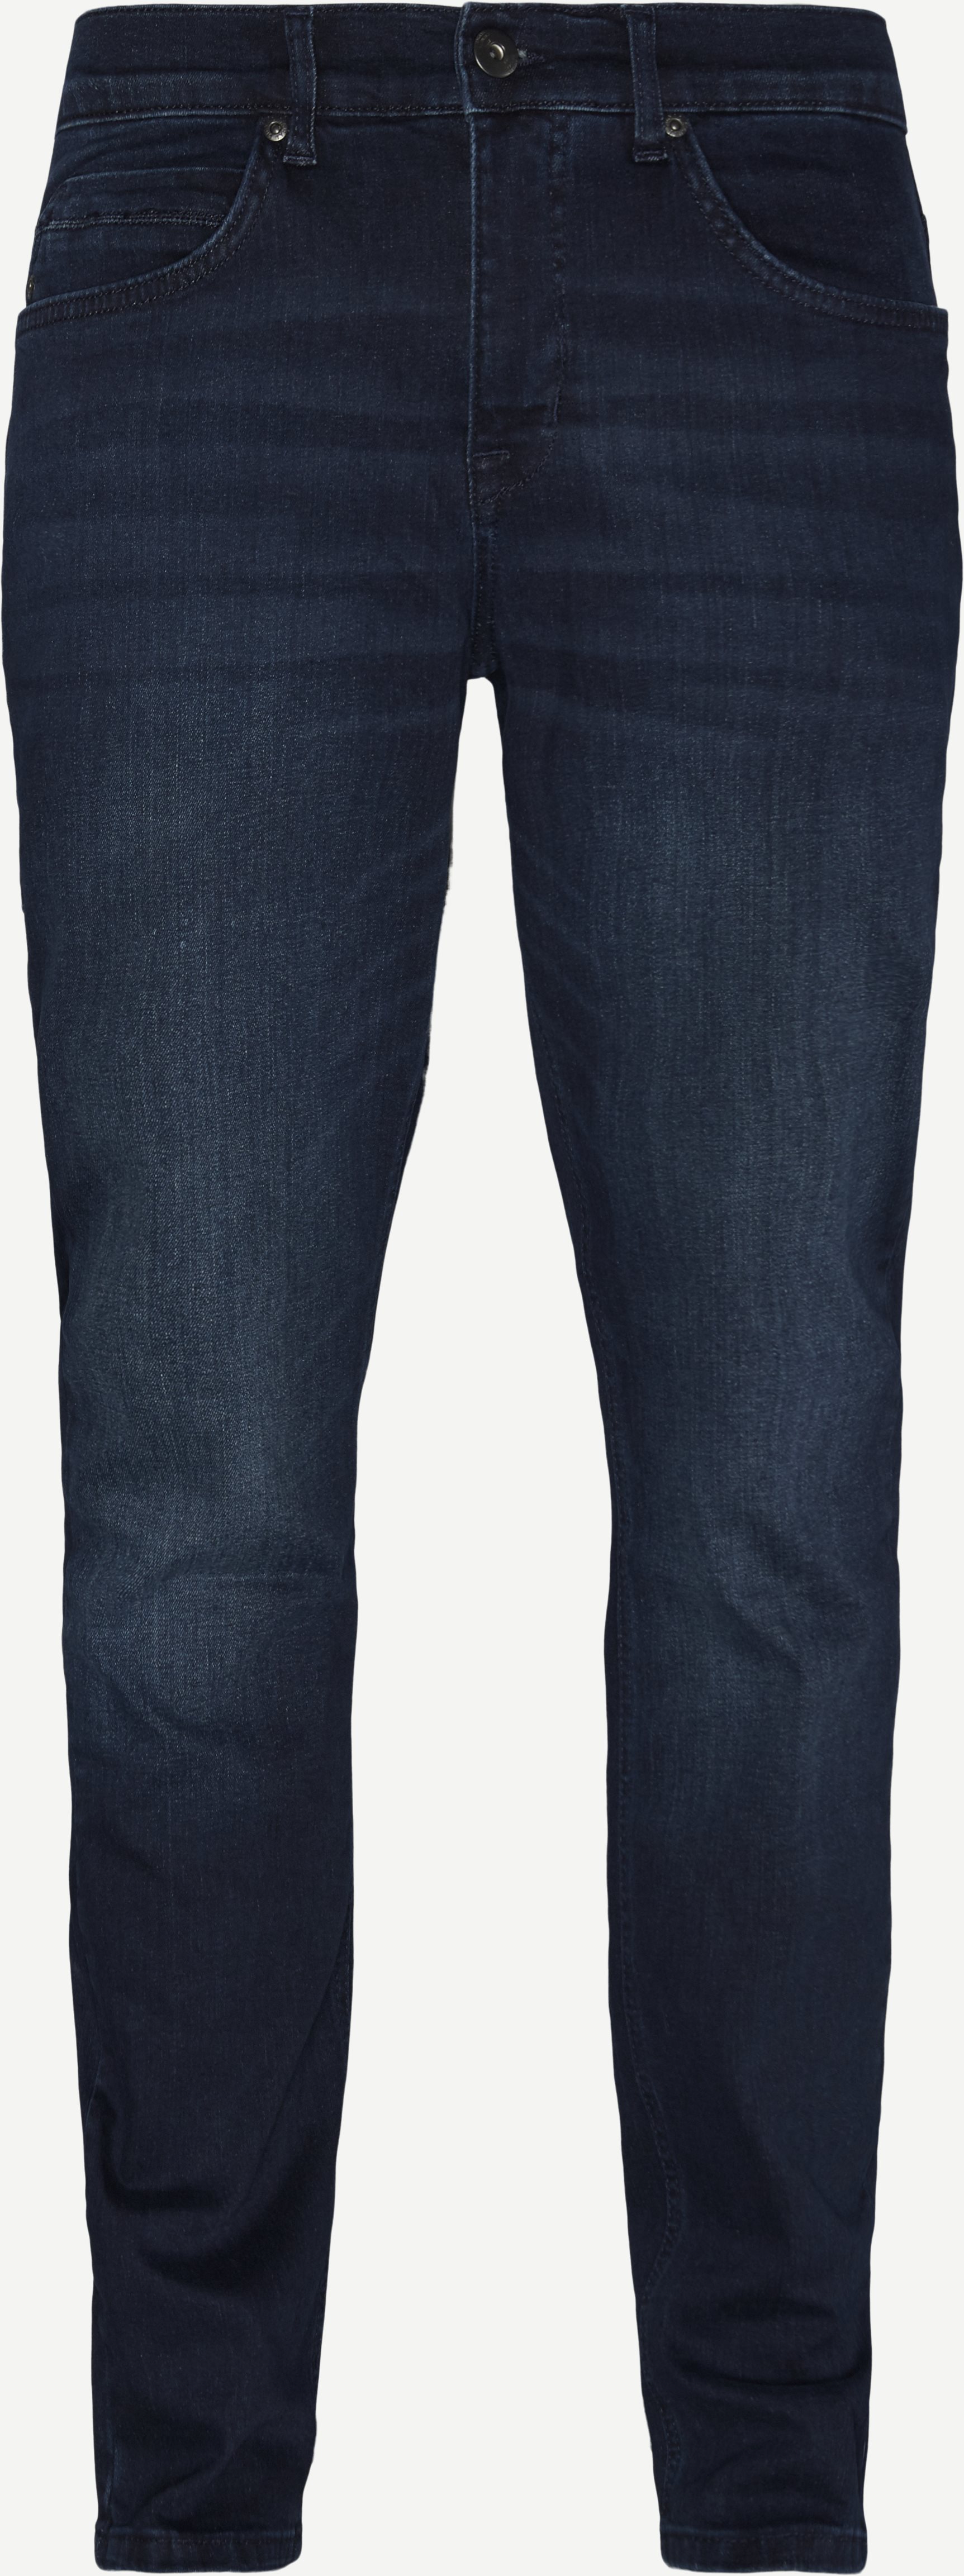 Fähre KM Jeans - Jeans - Tailored fit - Jeans-Blau